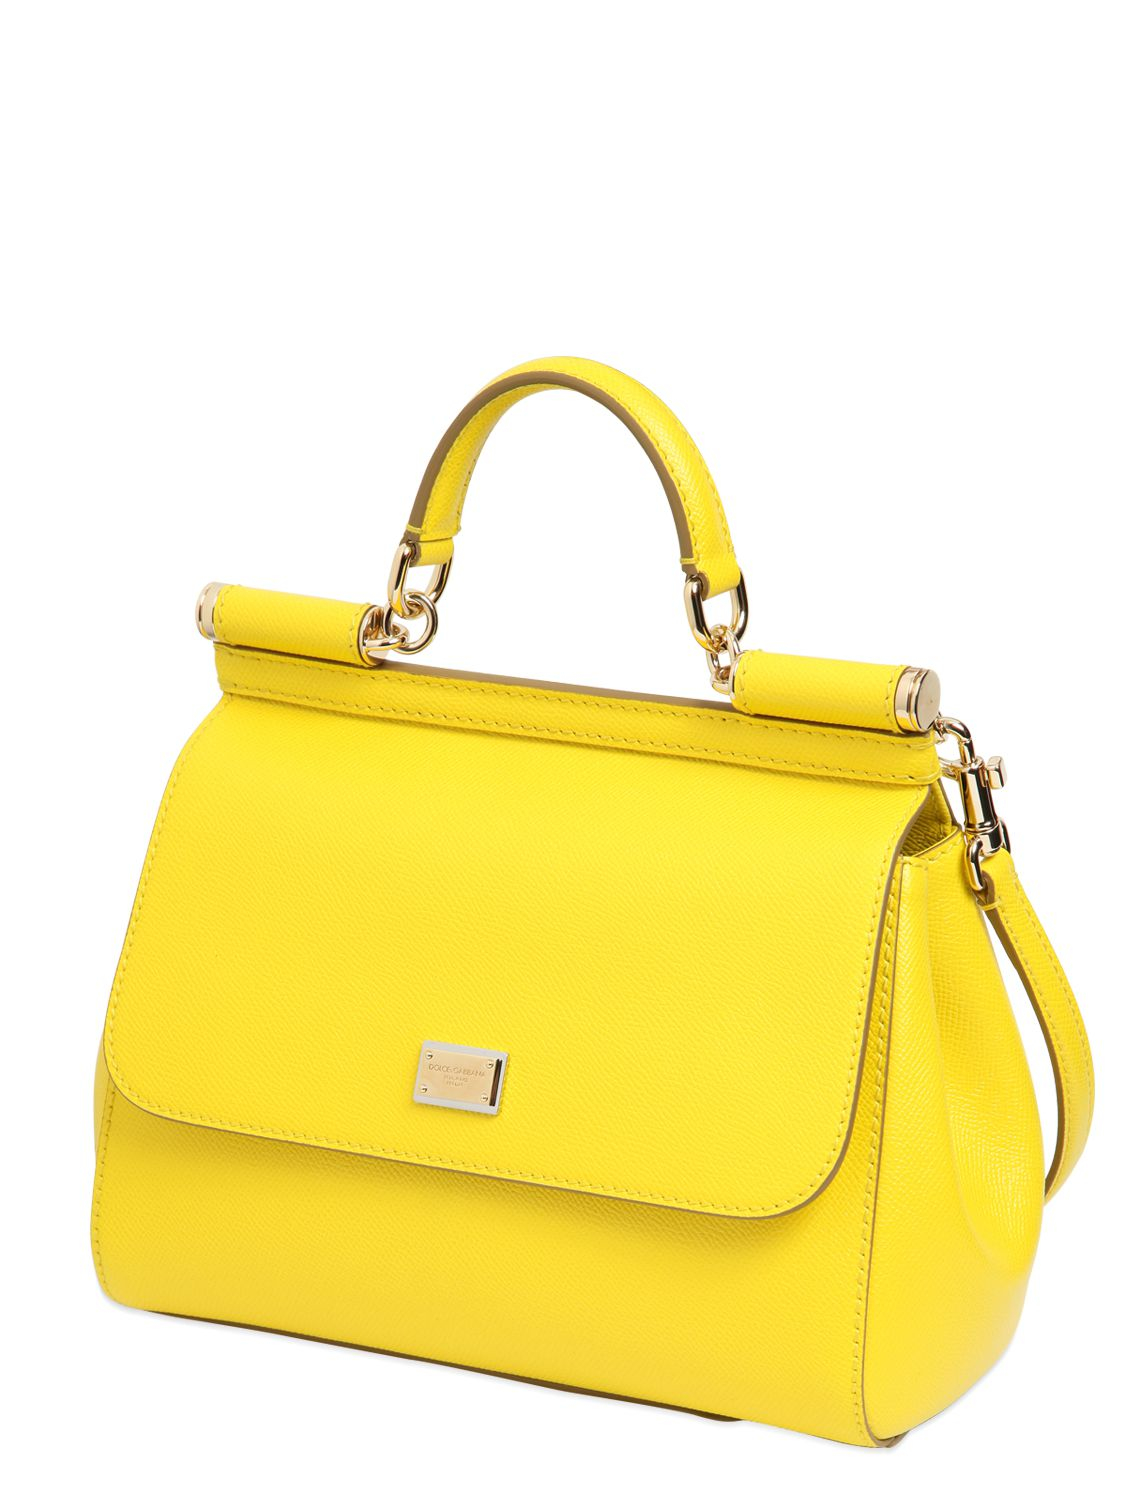 Lyst - Dolce & Gabbana Medium Sicily Dauphine Leather Bag in Yellow